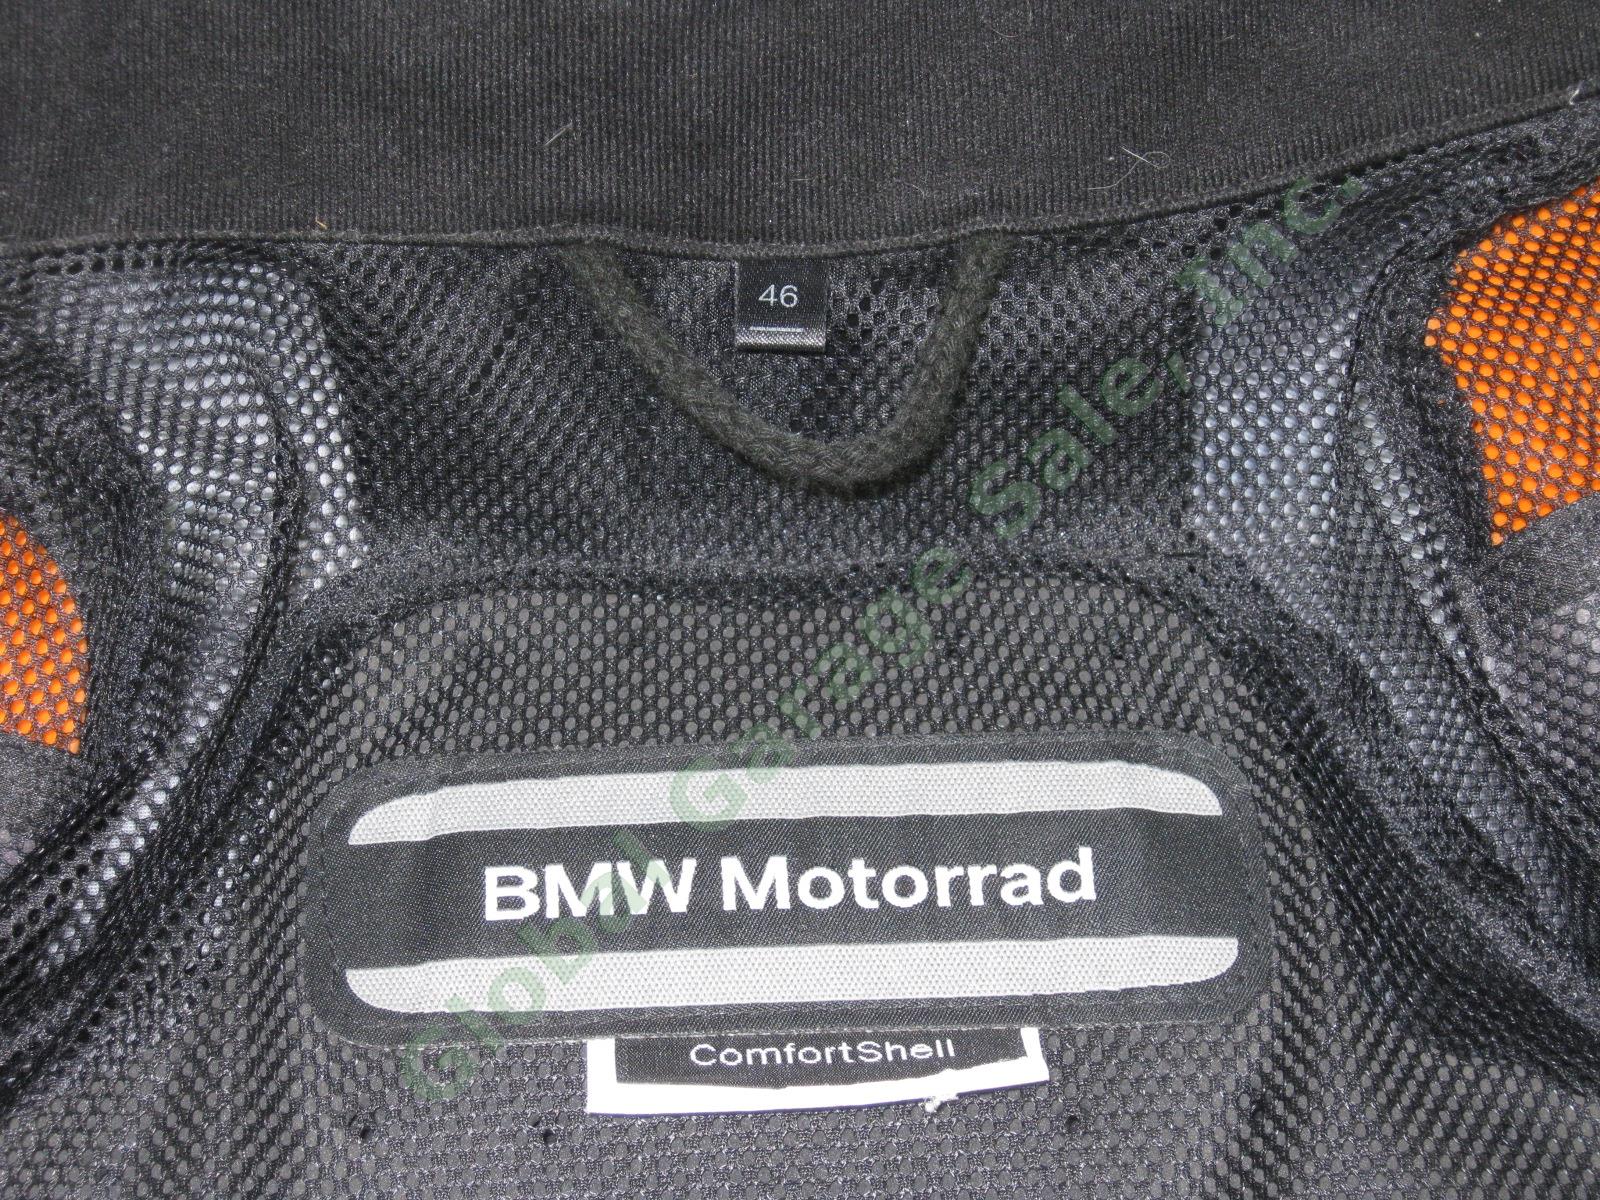 Womens ~2011 BMW Motorrad ComfortShell Motorcycle Jacket W/ Armor US 16 EU 46  N 4